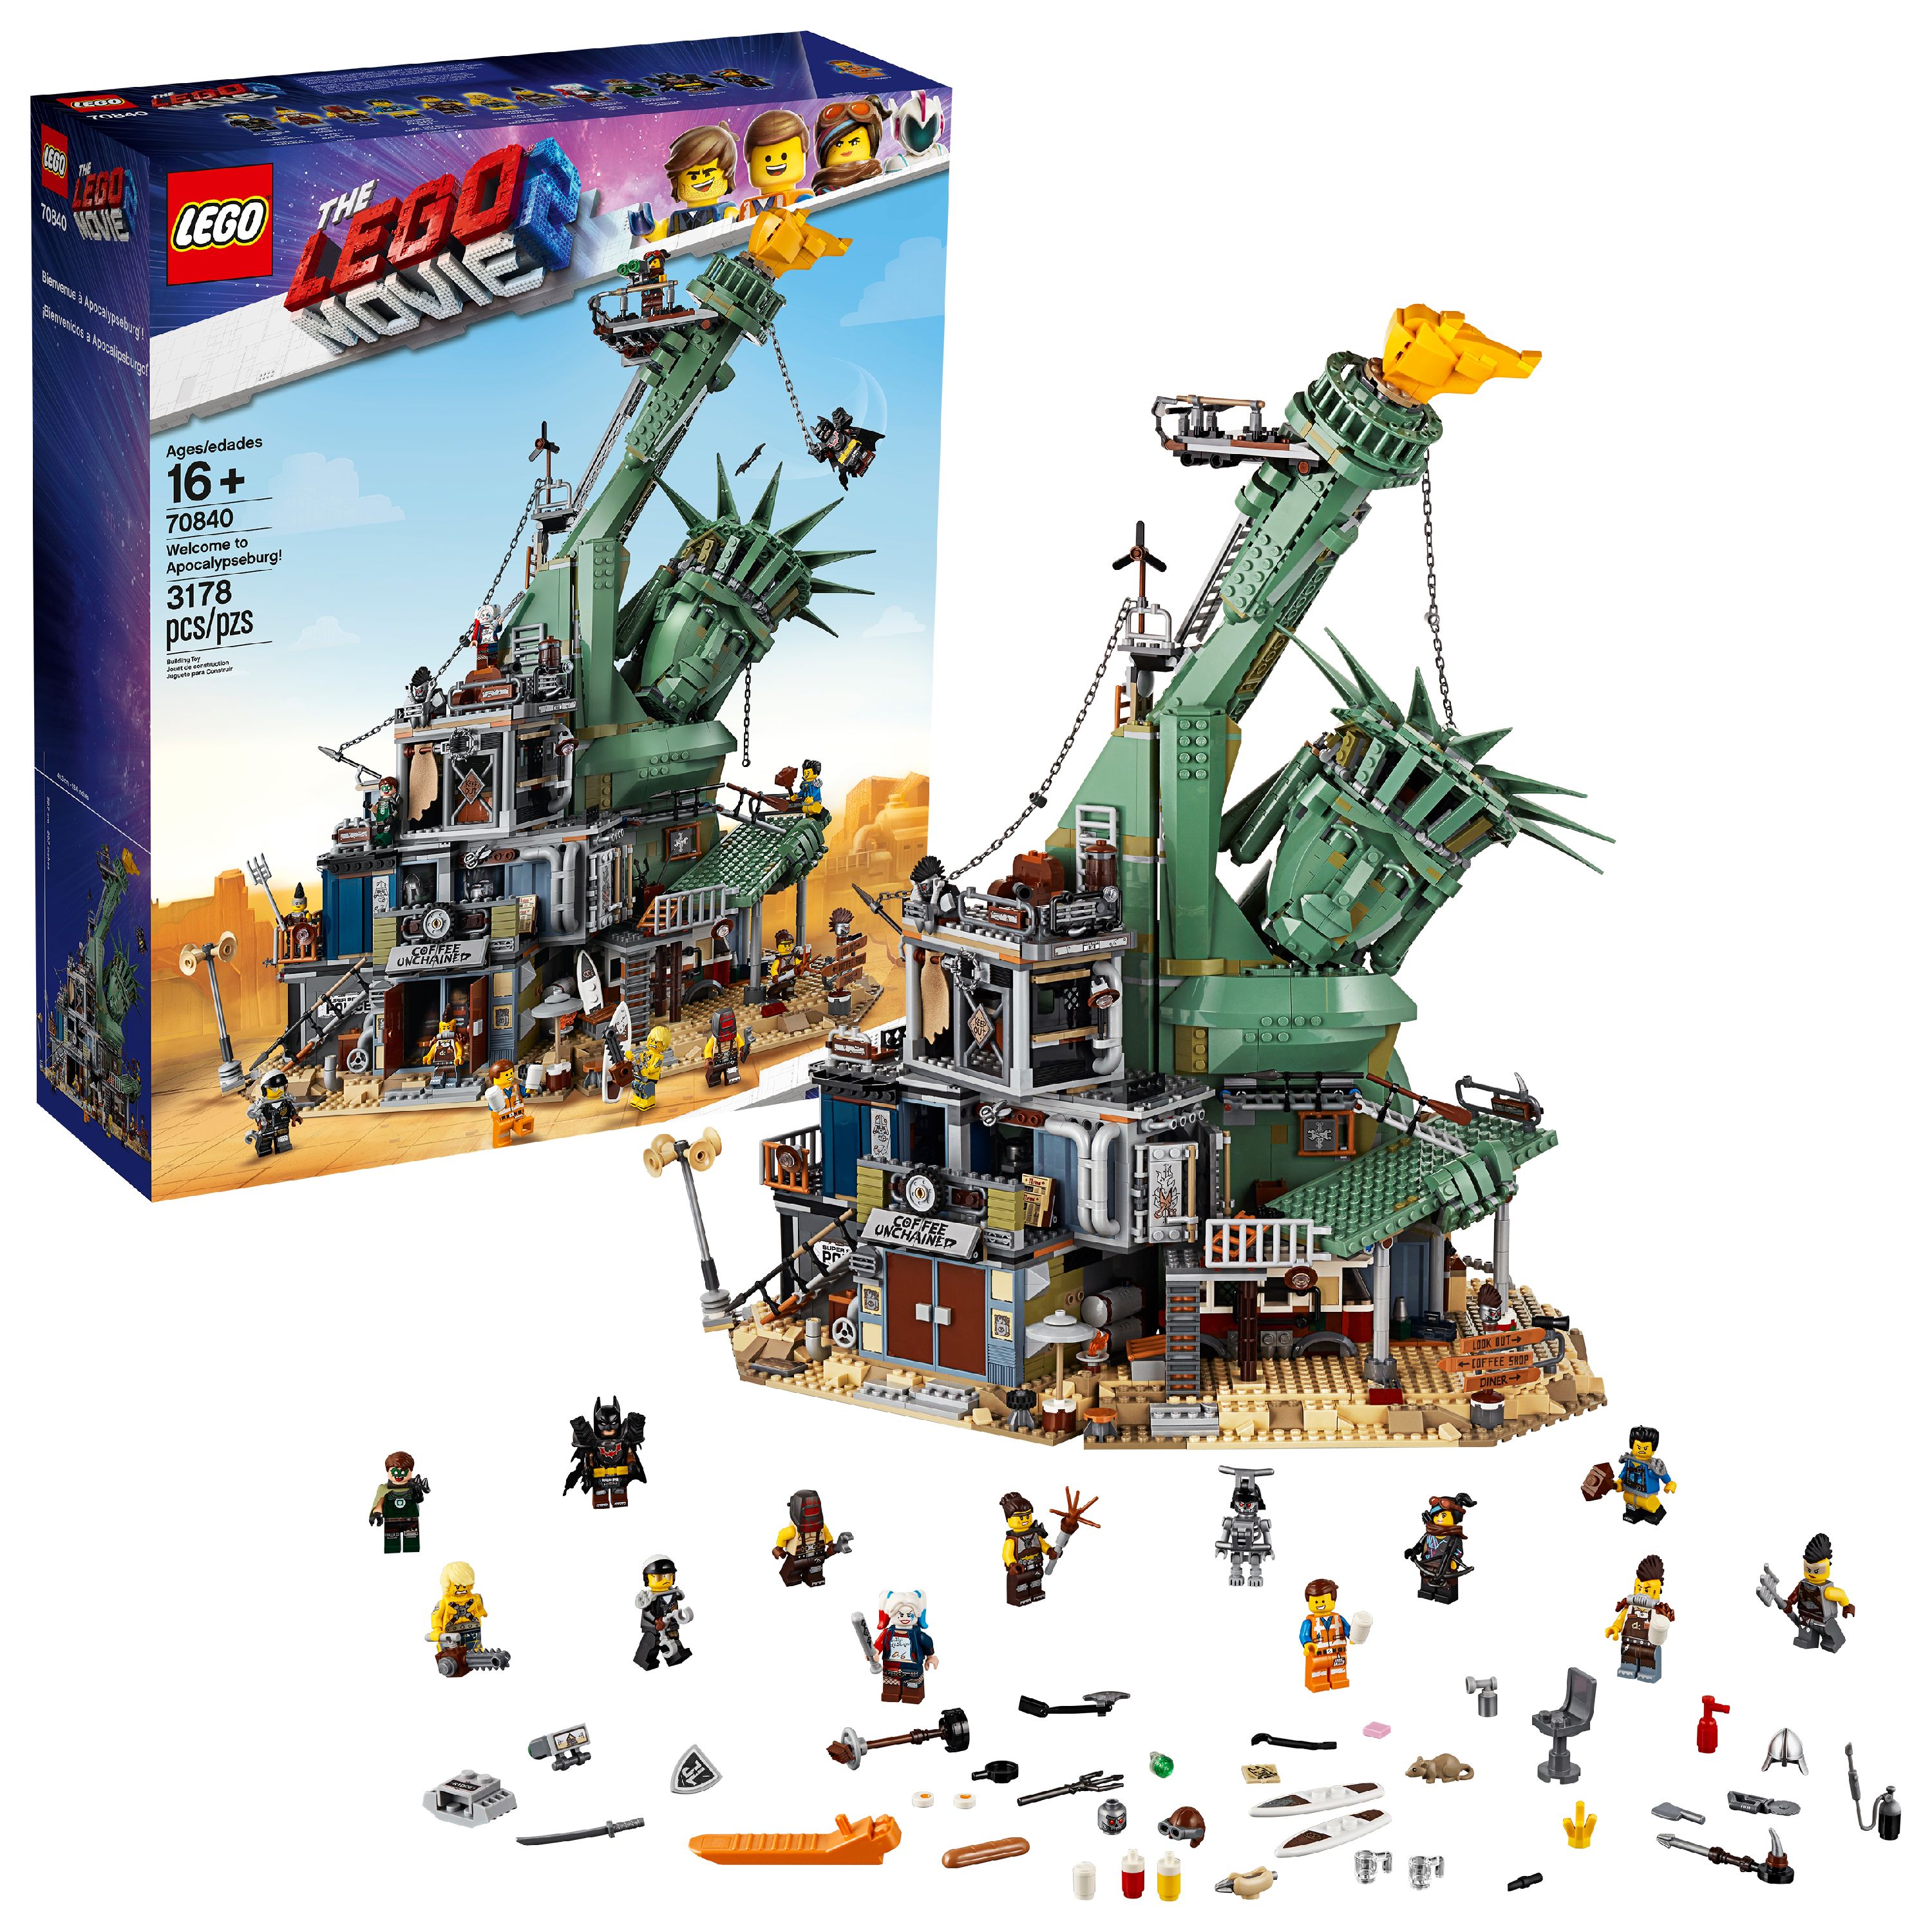 The LEGO 2 Movie Welcome to Apocalypseburg! 70840 - image 1 of 7